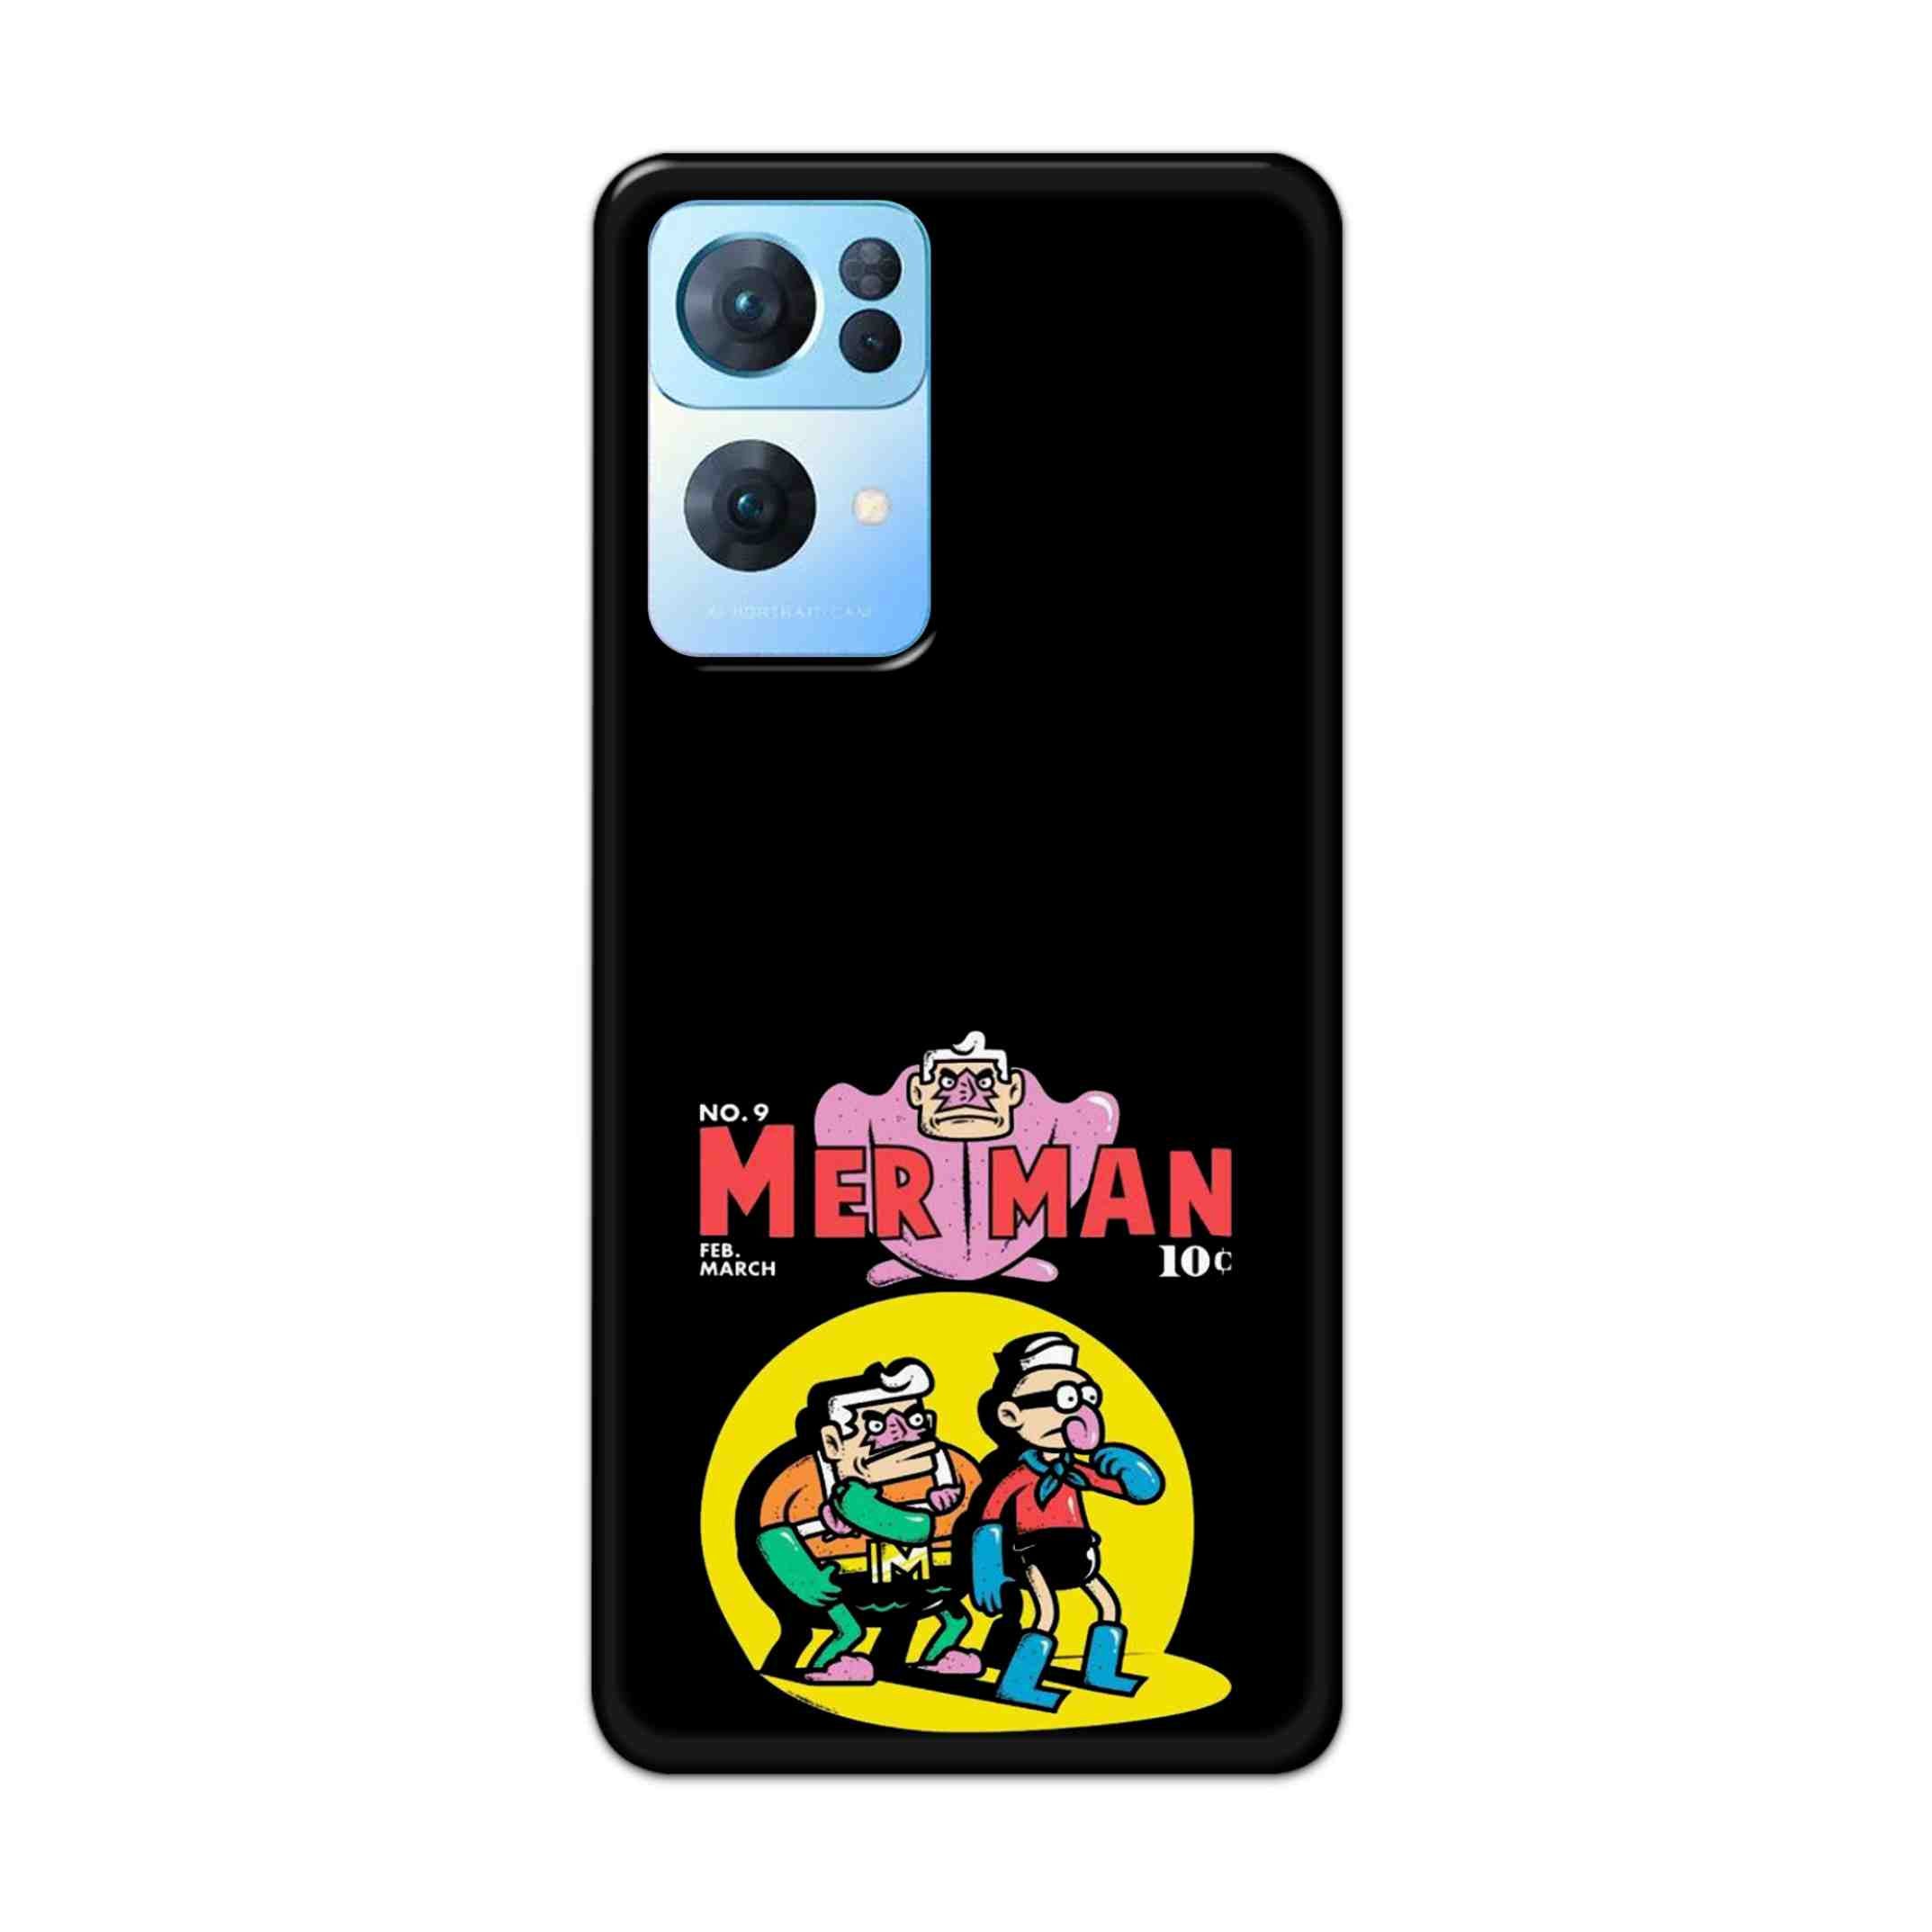 Buy Merman Hard Back Mobile Phone Case Cover For Oppo Reno 7 Pro Online